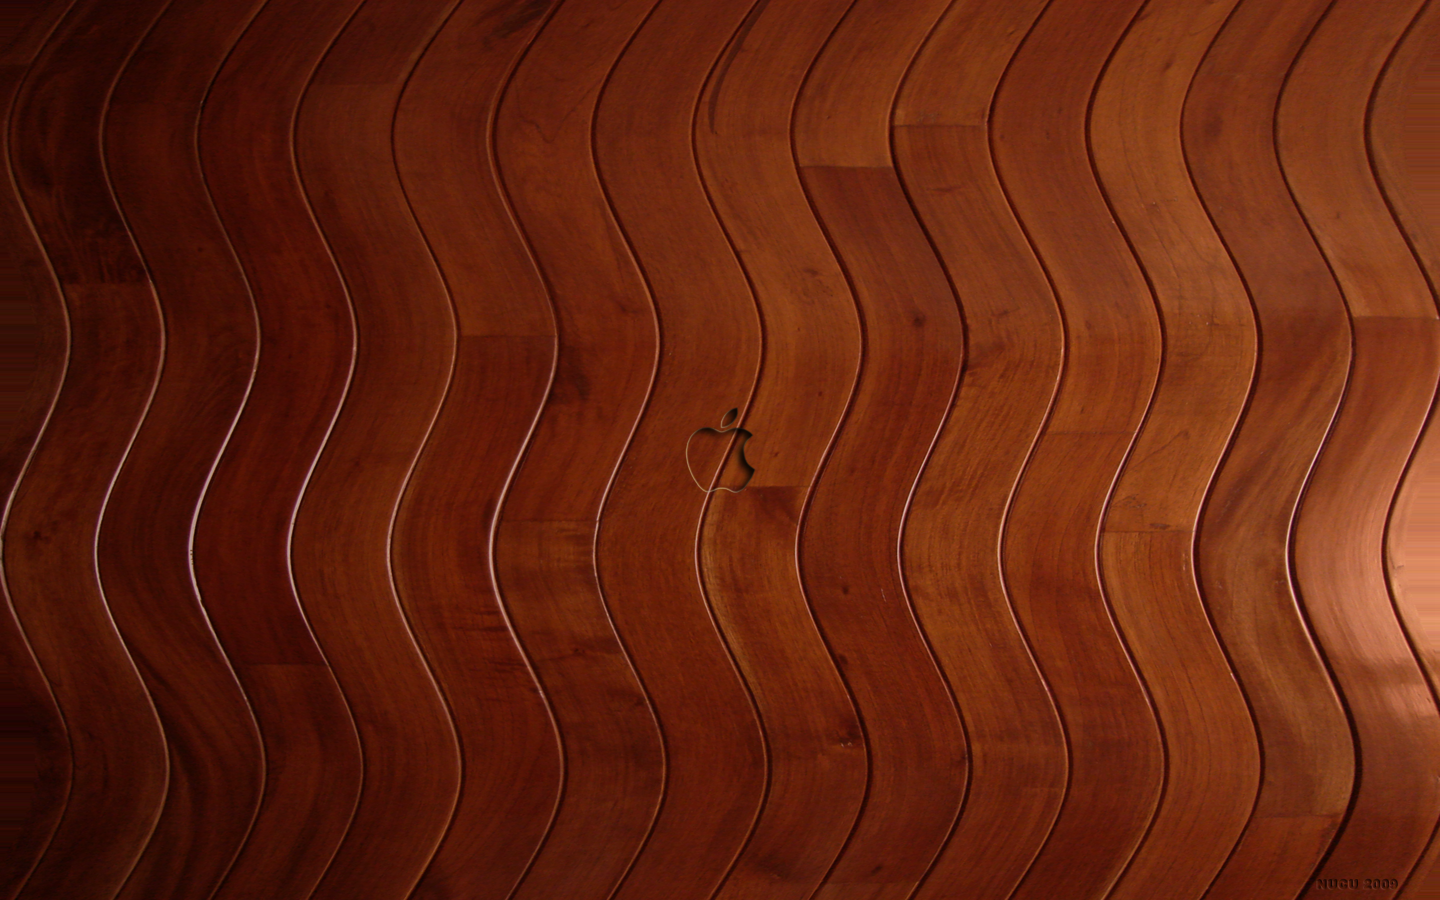 General 1440x900 Apple Inc. wooden surface logo waves texture digital art shapes lines wood